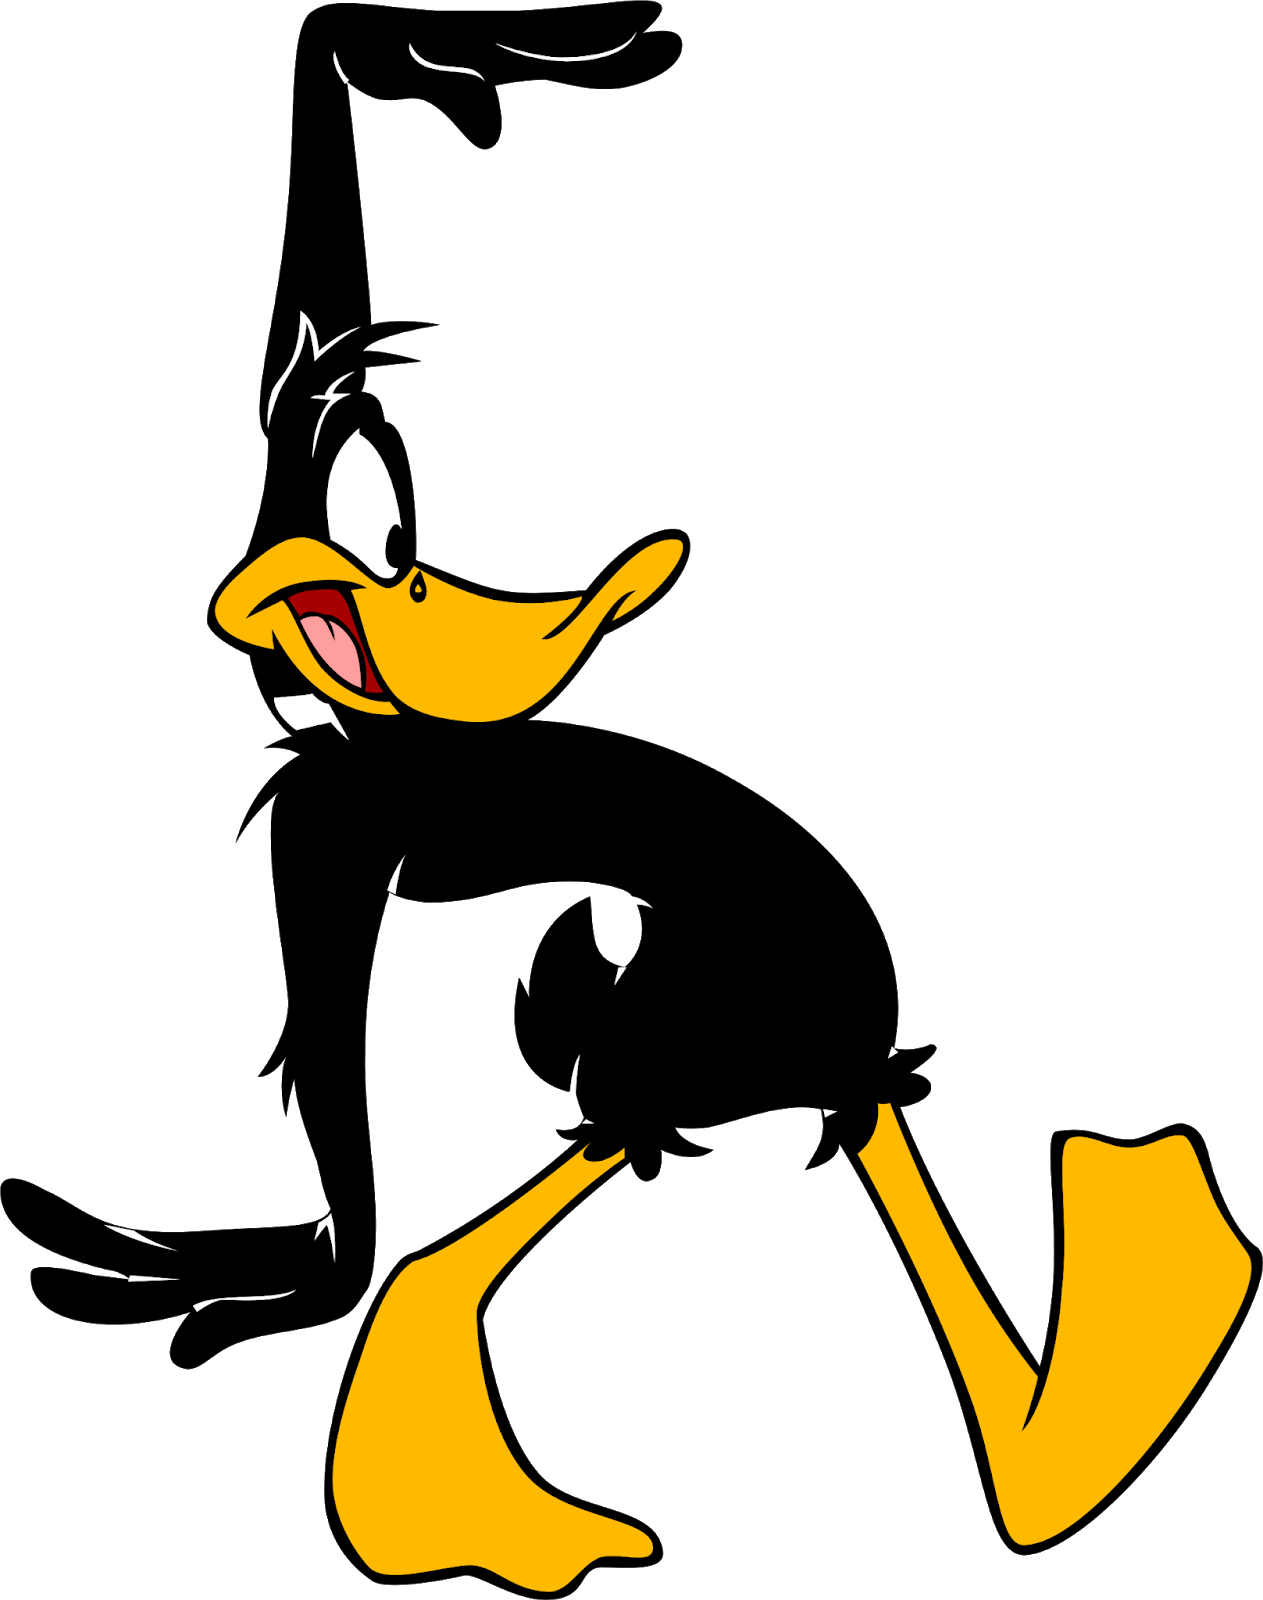 Clip Arts Related To : Daffy Duck Clipart Daffy Duck Yosemite Sam Transpare...